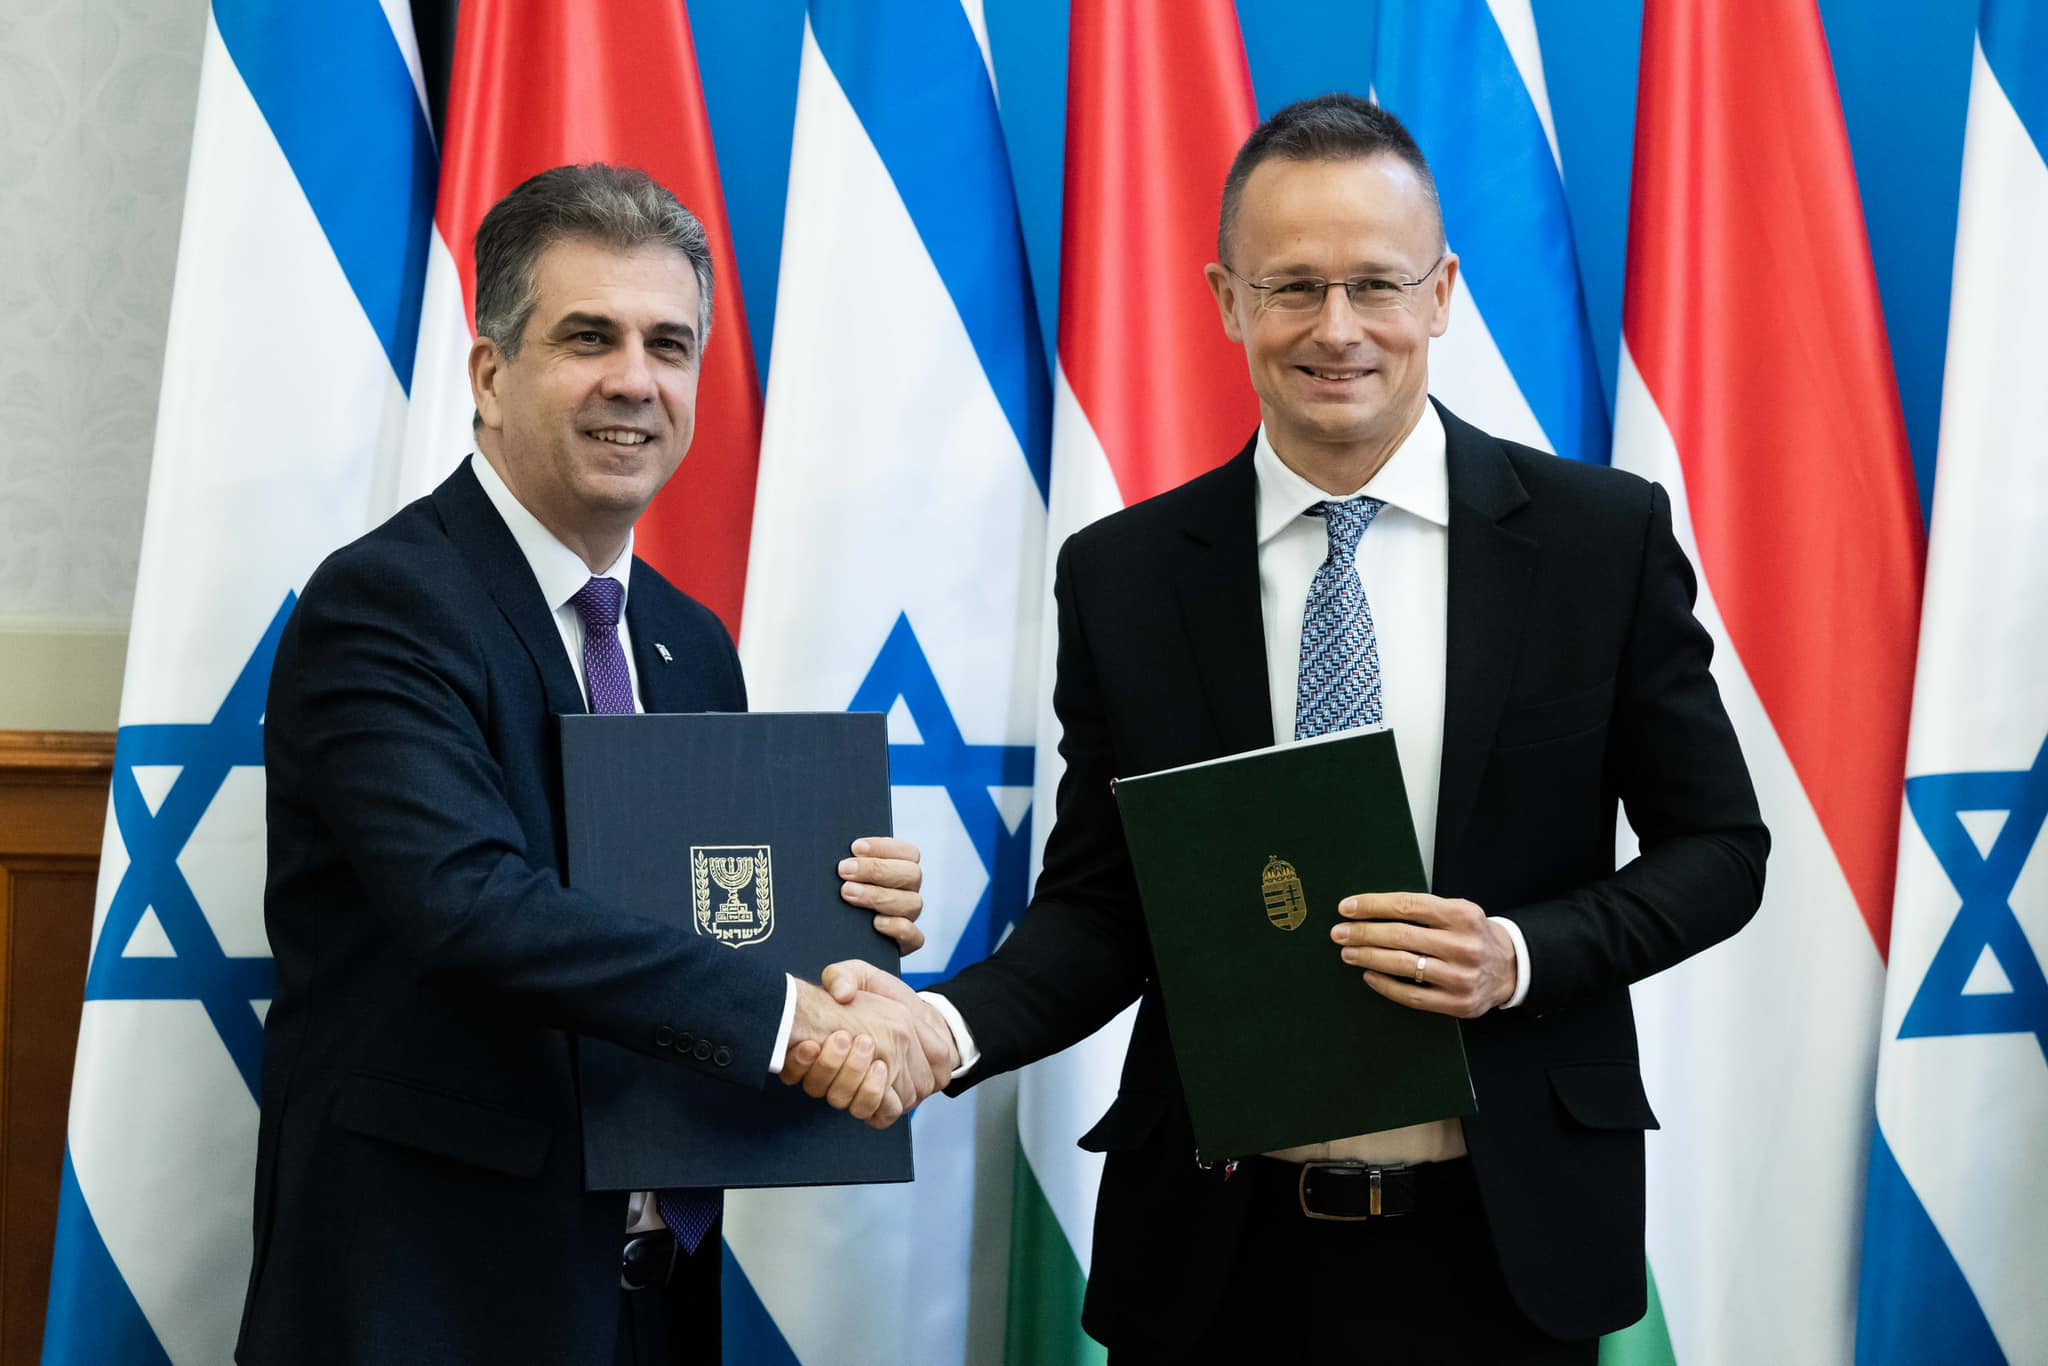 Hungary-Israel Cooperation At All-Time High, Claims FM Szijjártó